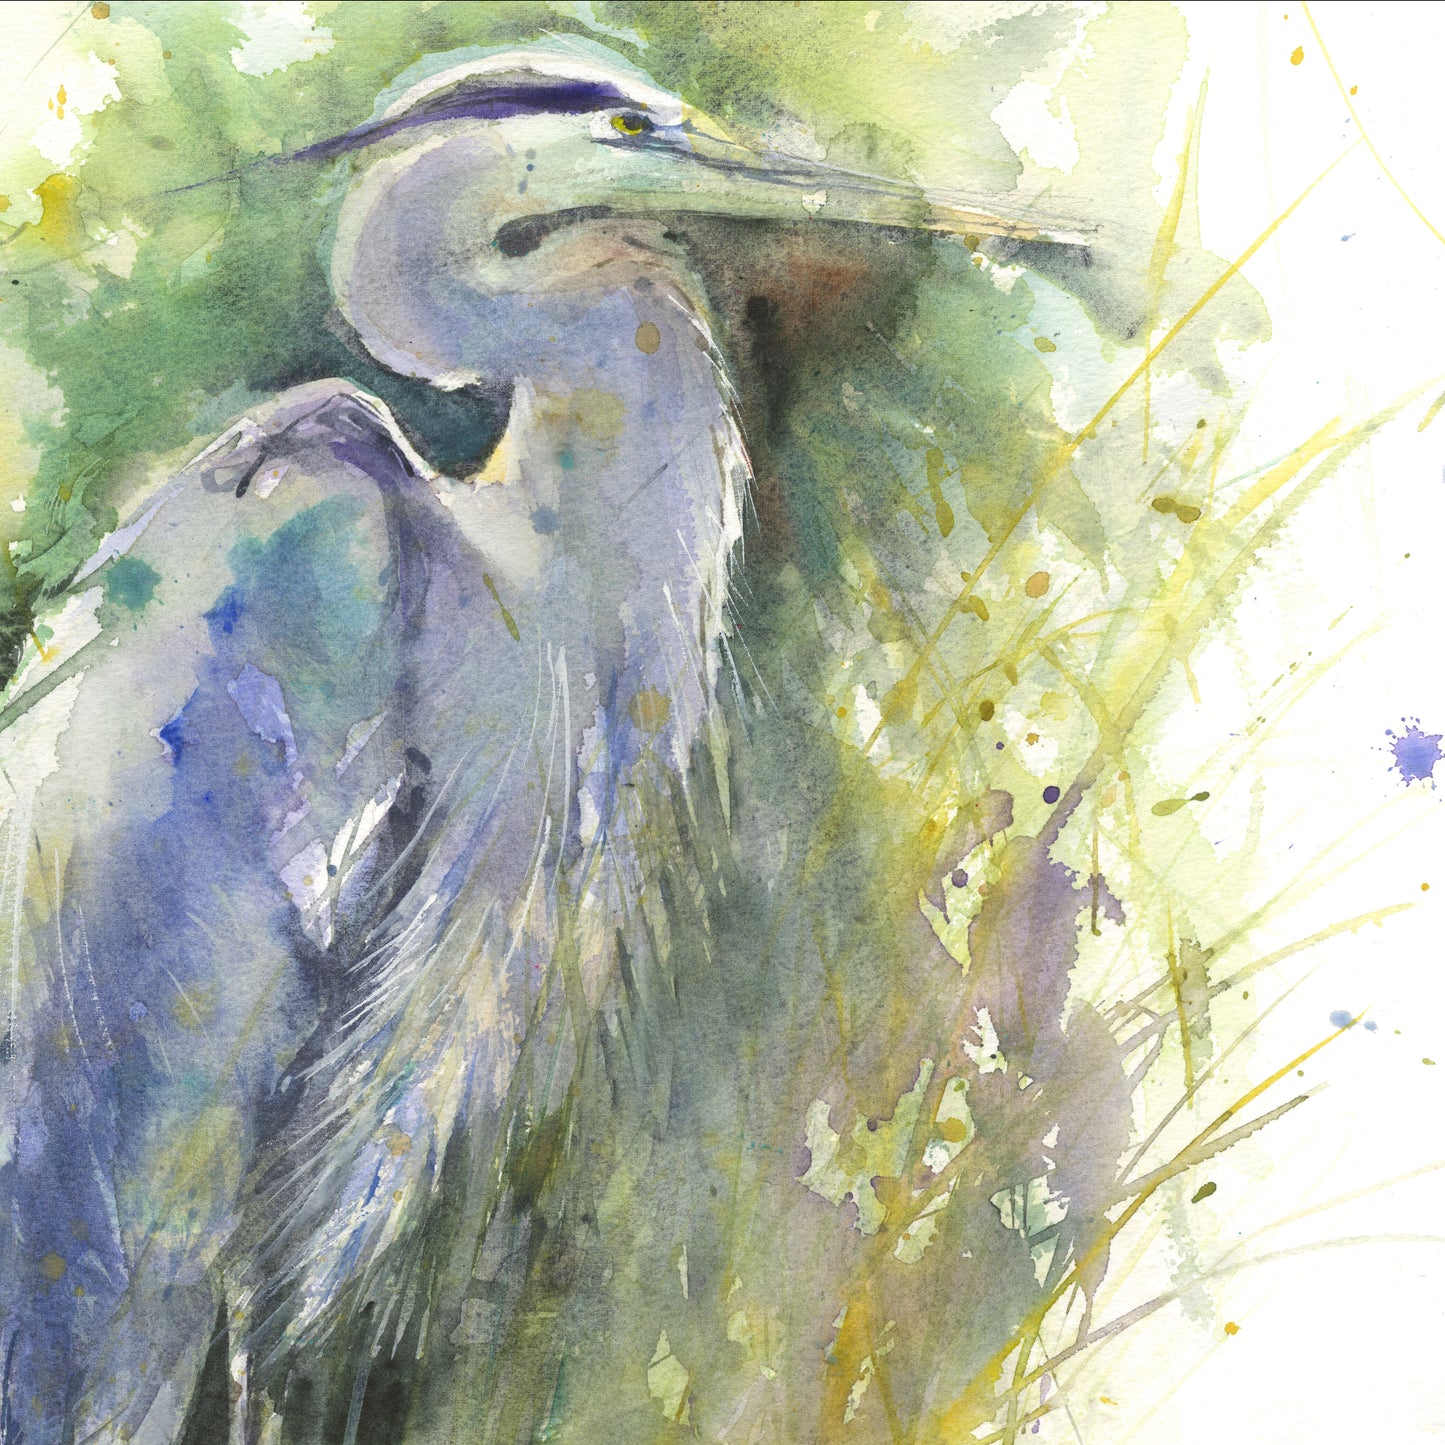 Art print from original watercolour painting "Blue heron" - Jen Buckley Art limited edition animal art prints